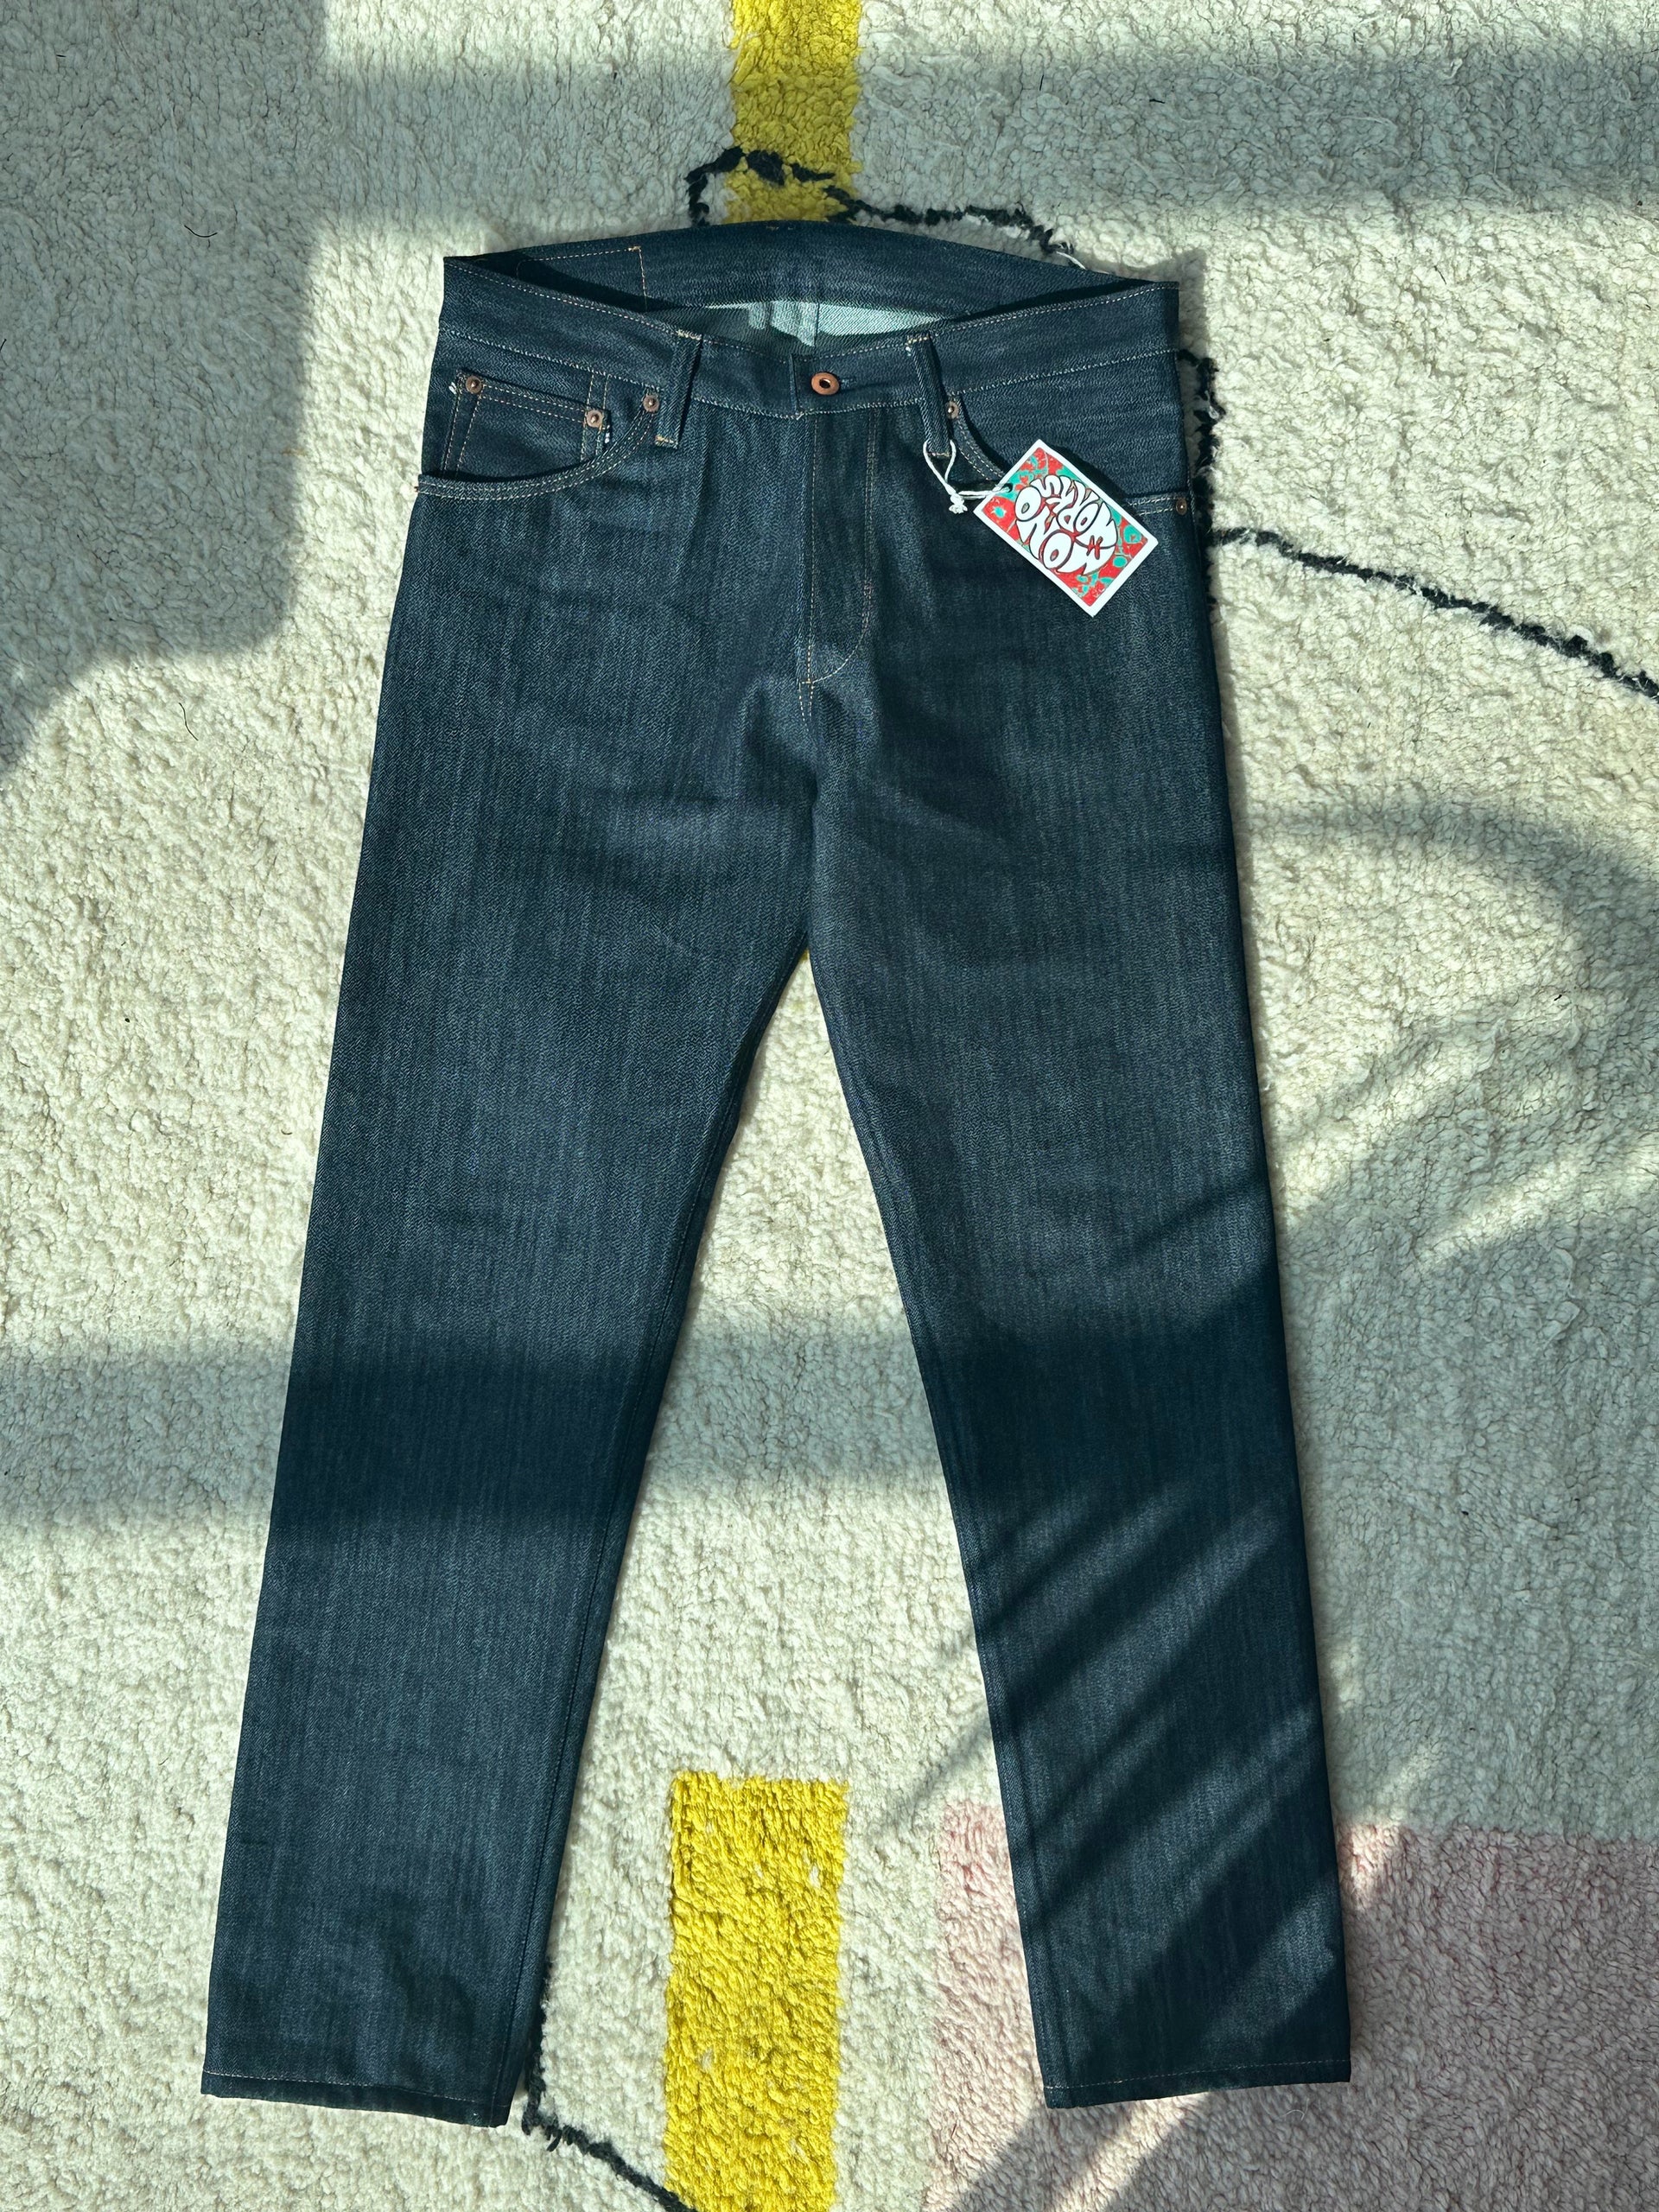 5 Pocket Jeans - Regular Taper - 33